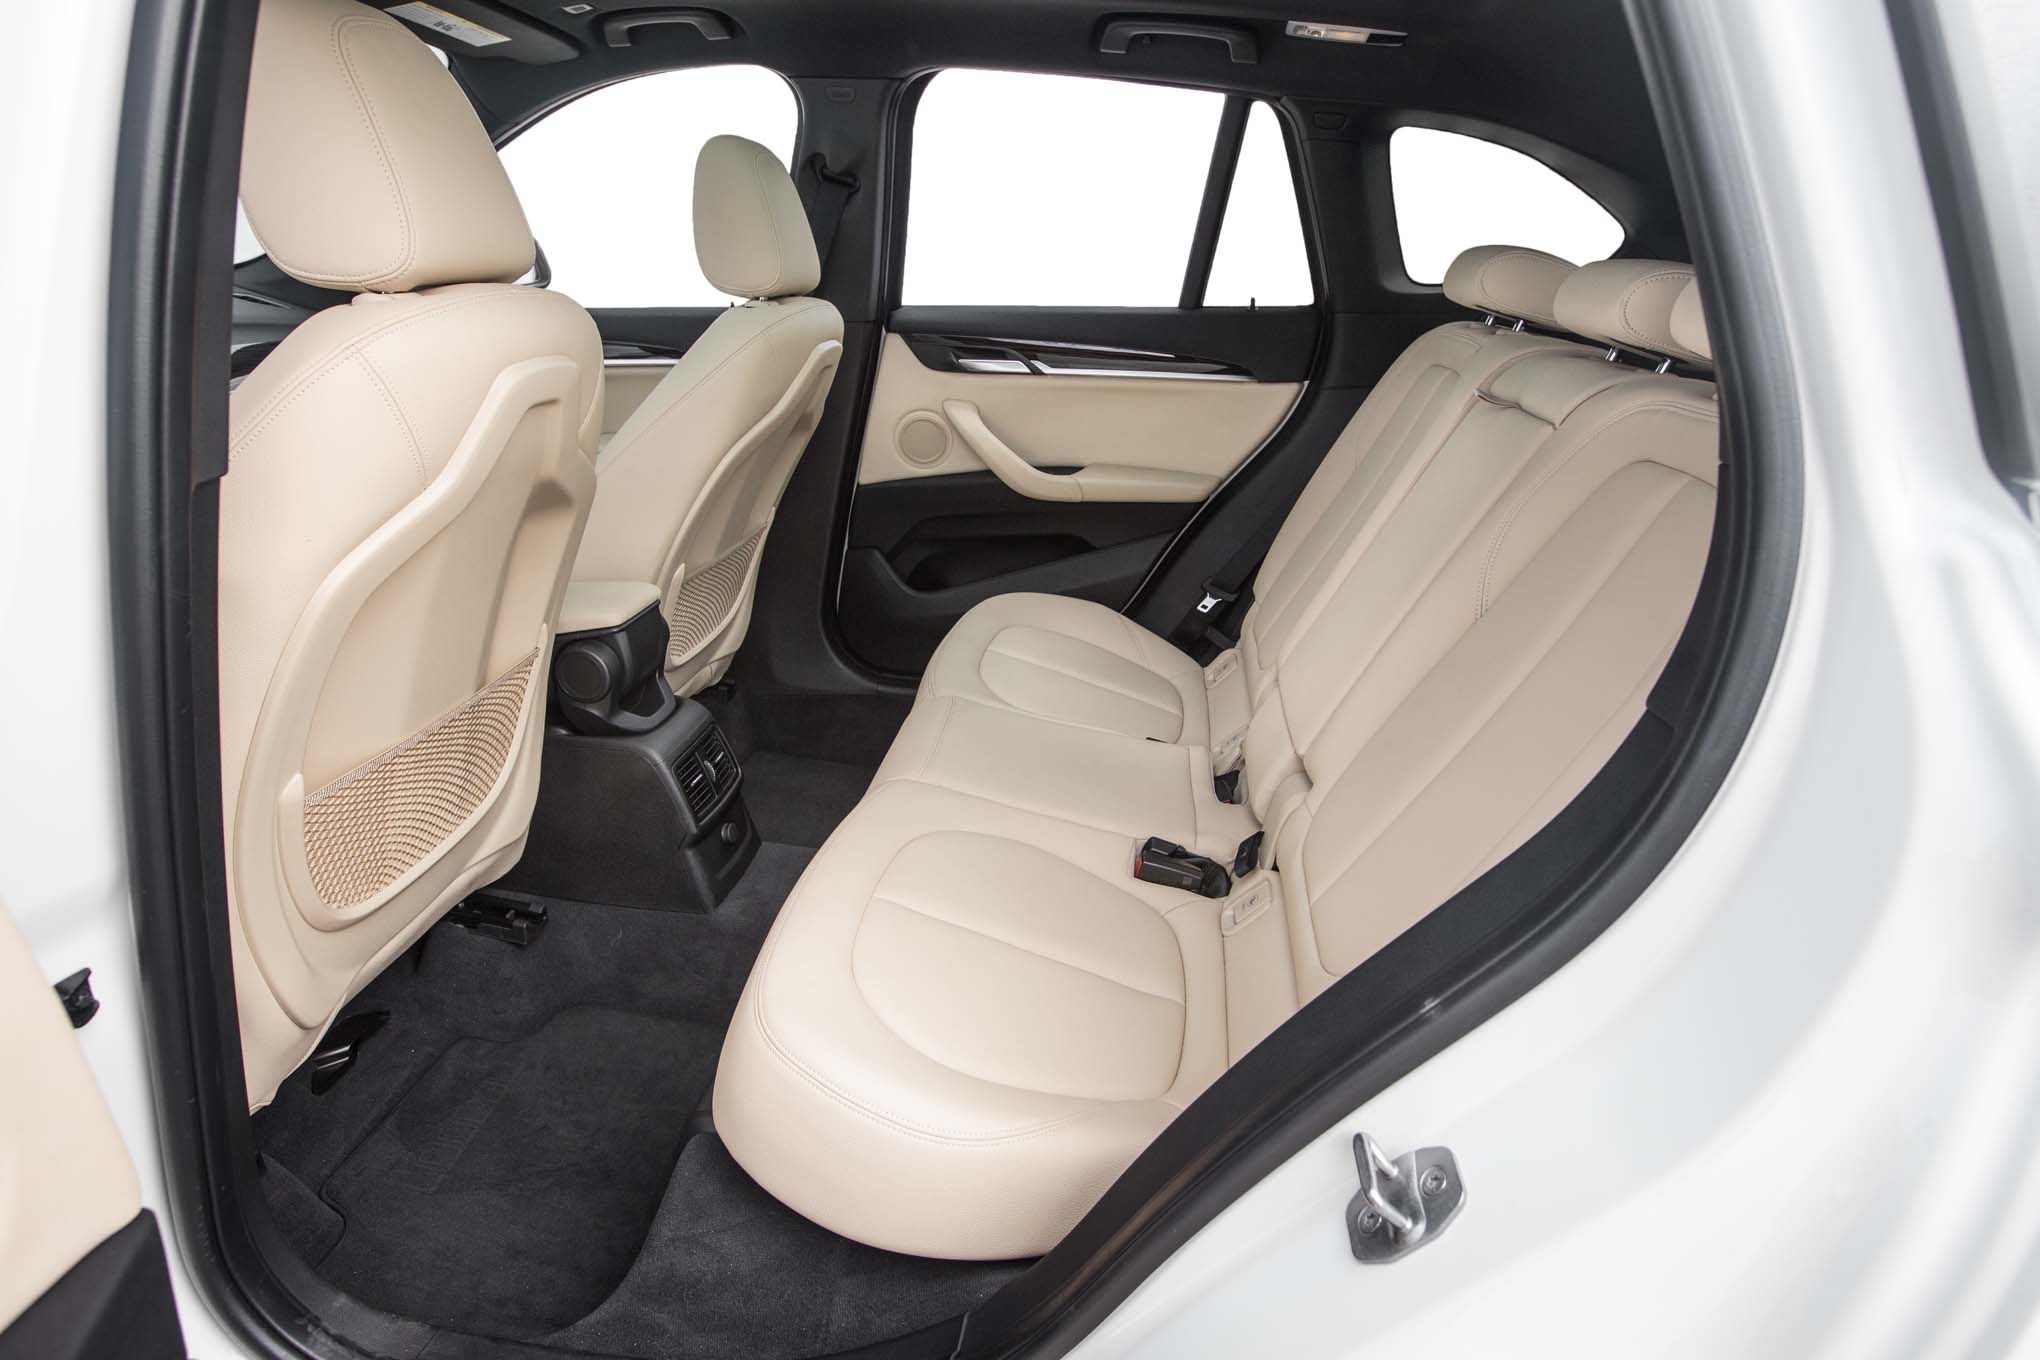 2017 Bmw X1 Xdrive28i Interior Seats